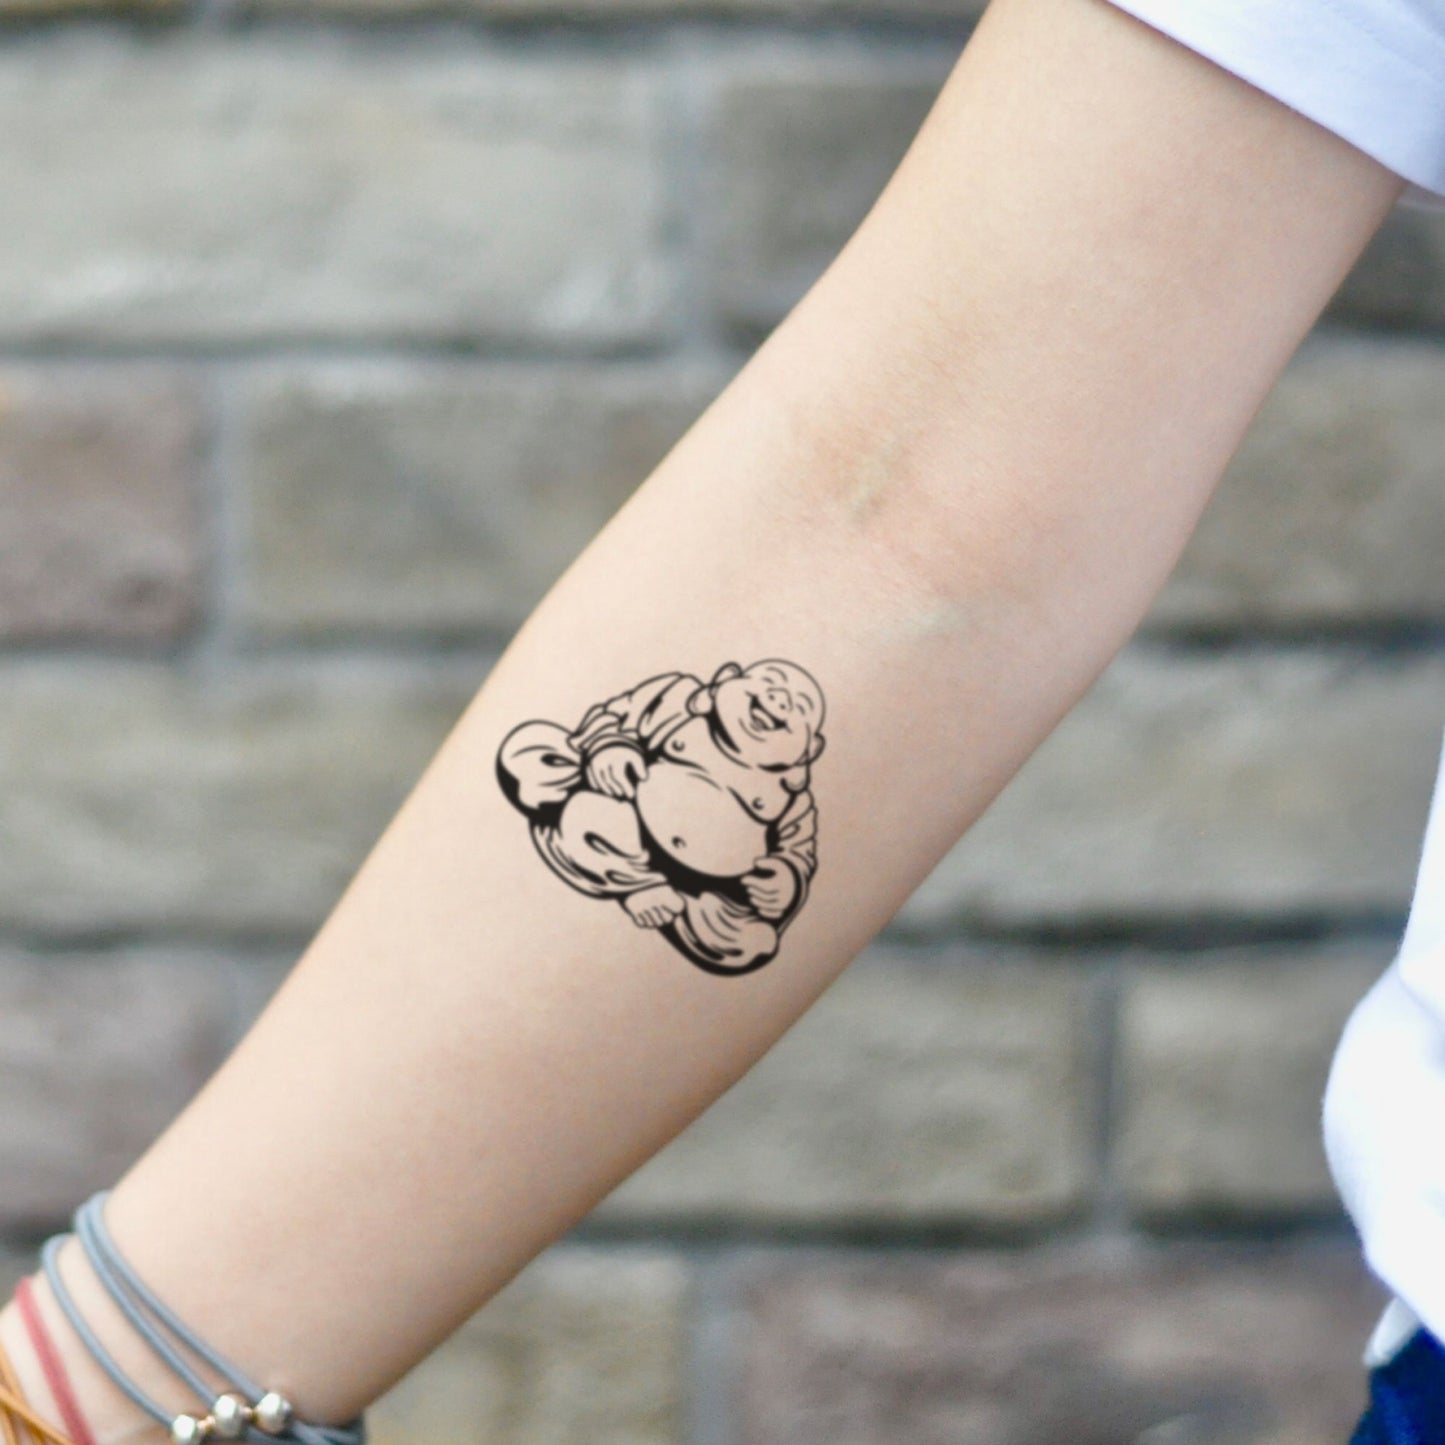 fake small happy laughing fat buddha illustrative temporary tattoo sticker design idea on inner arm